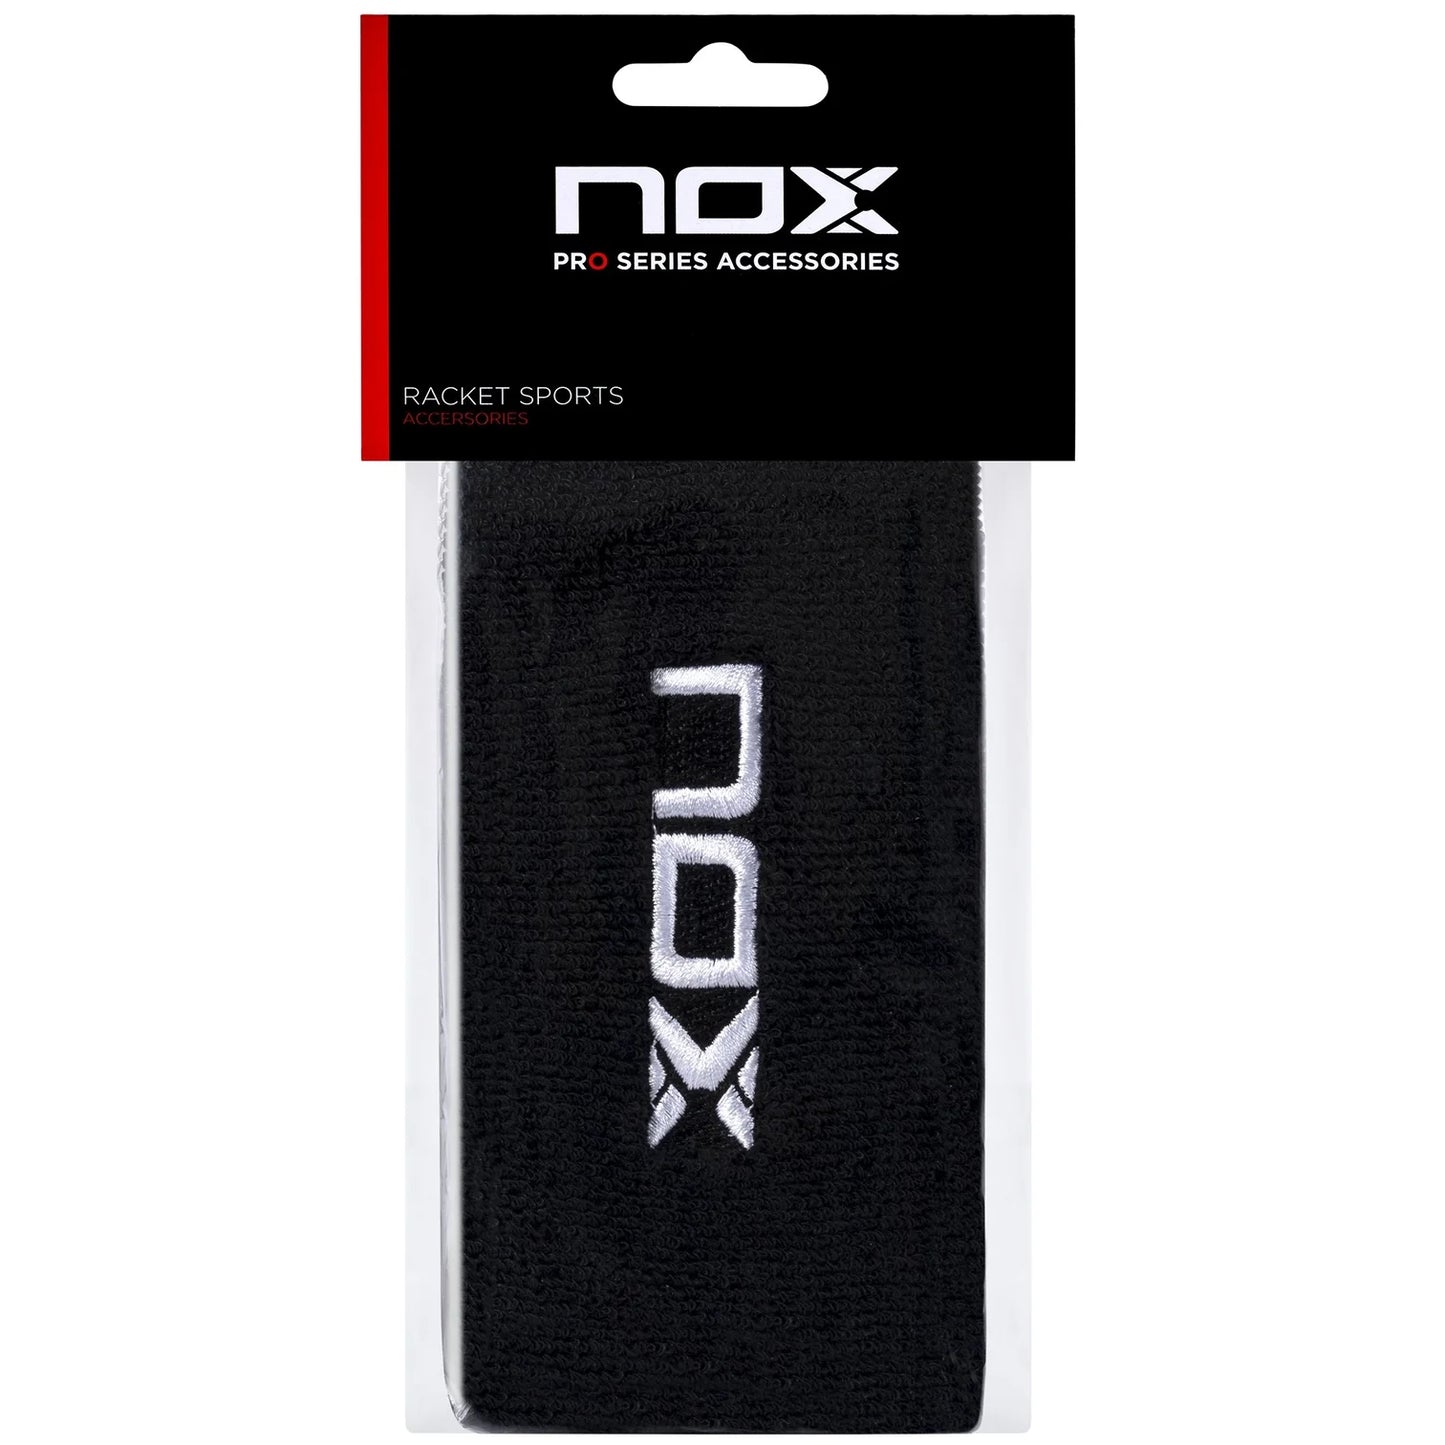 NOX long sport wristbands black/white